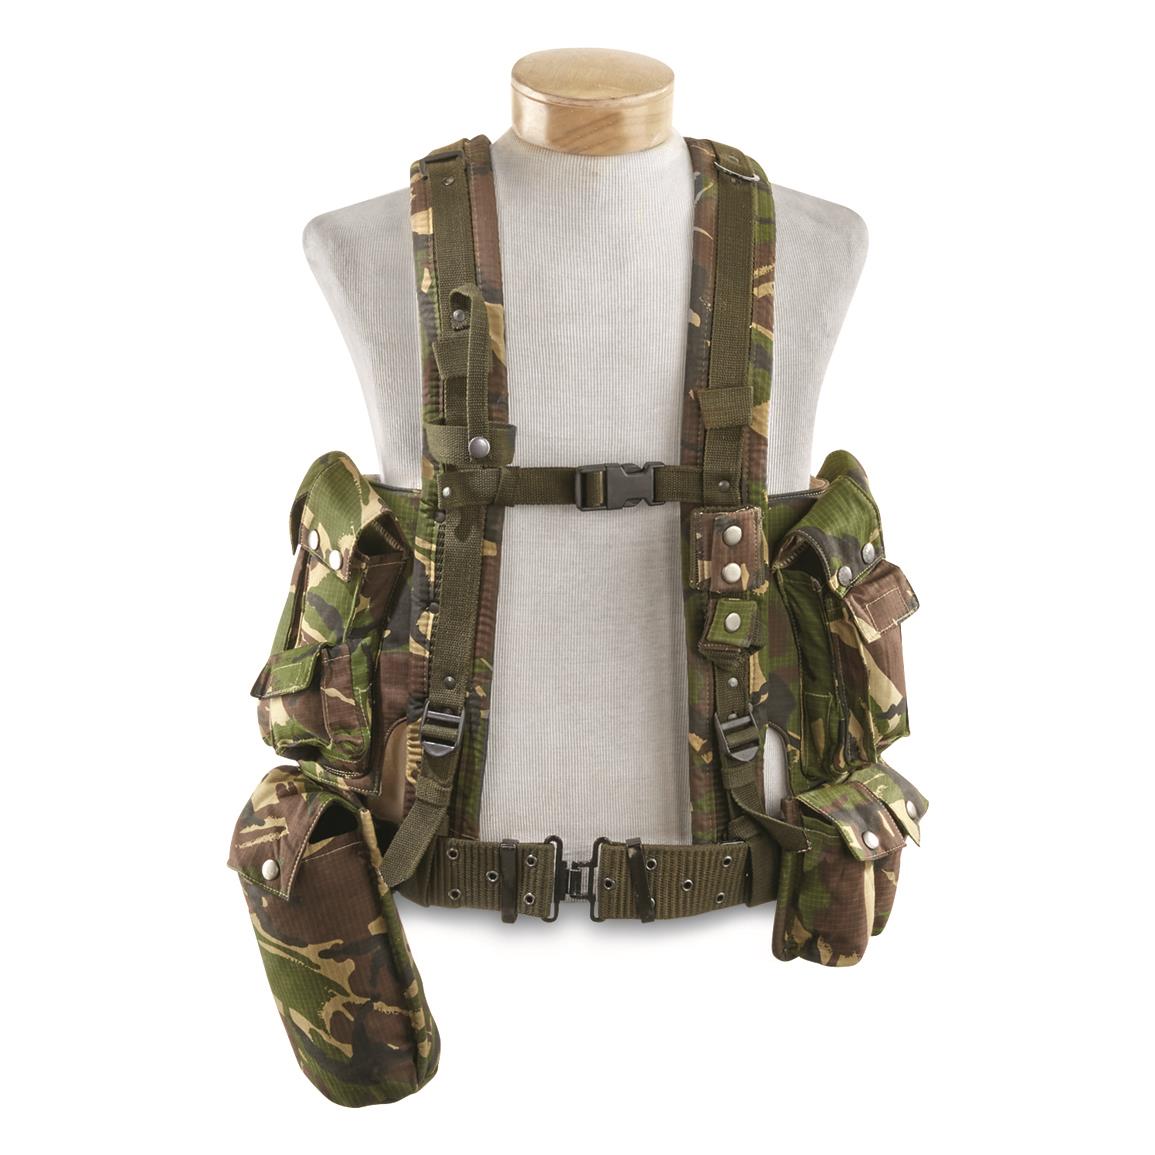 Romanian Military Surplus Canvas and Leather Combat Vest, New, DPM Camo